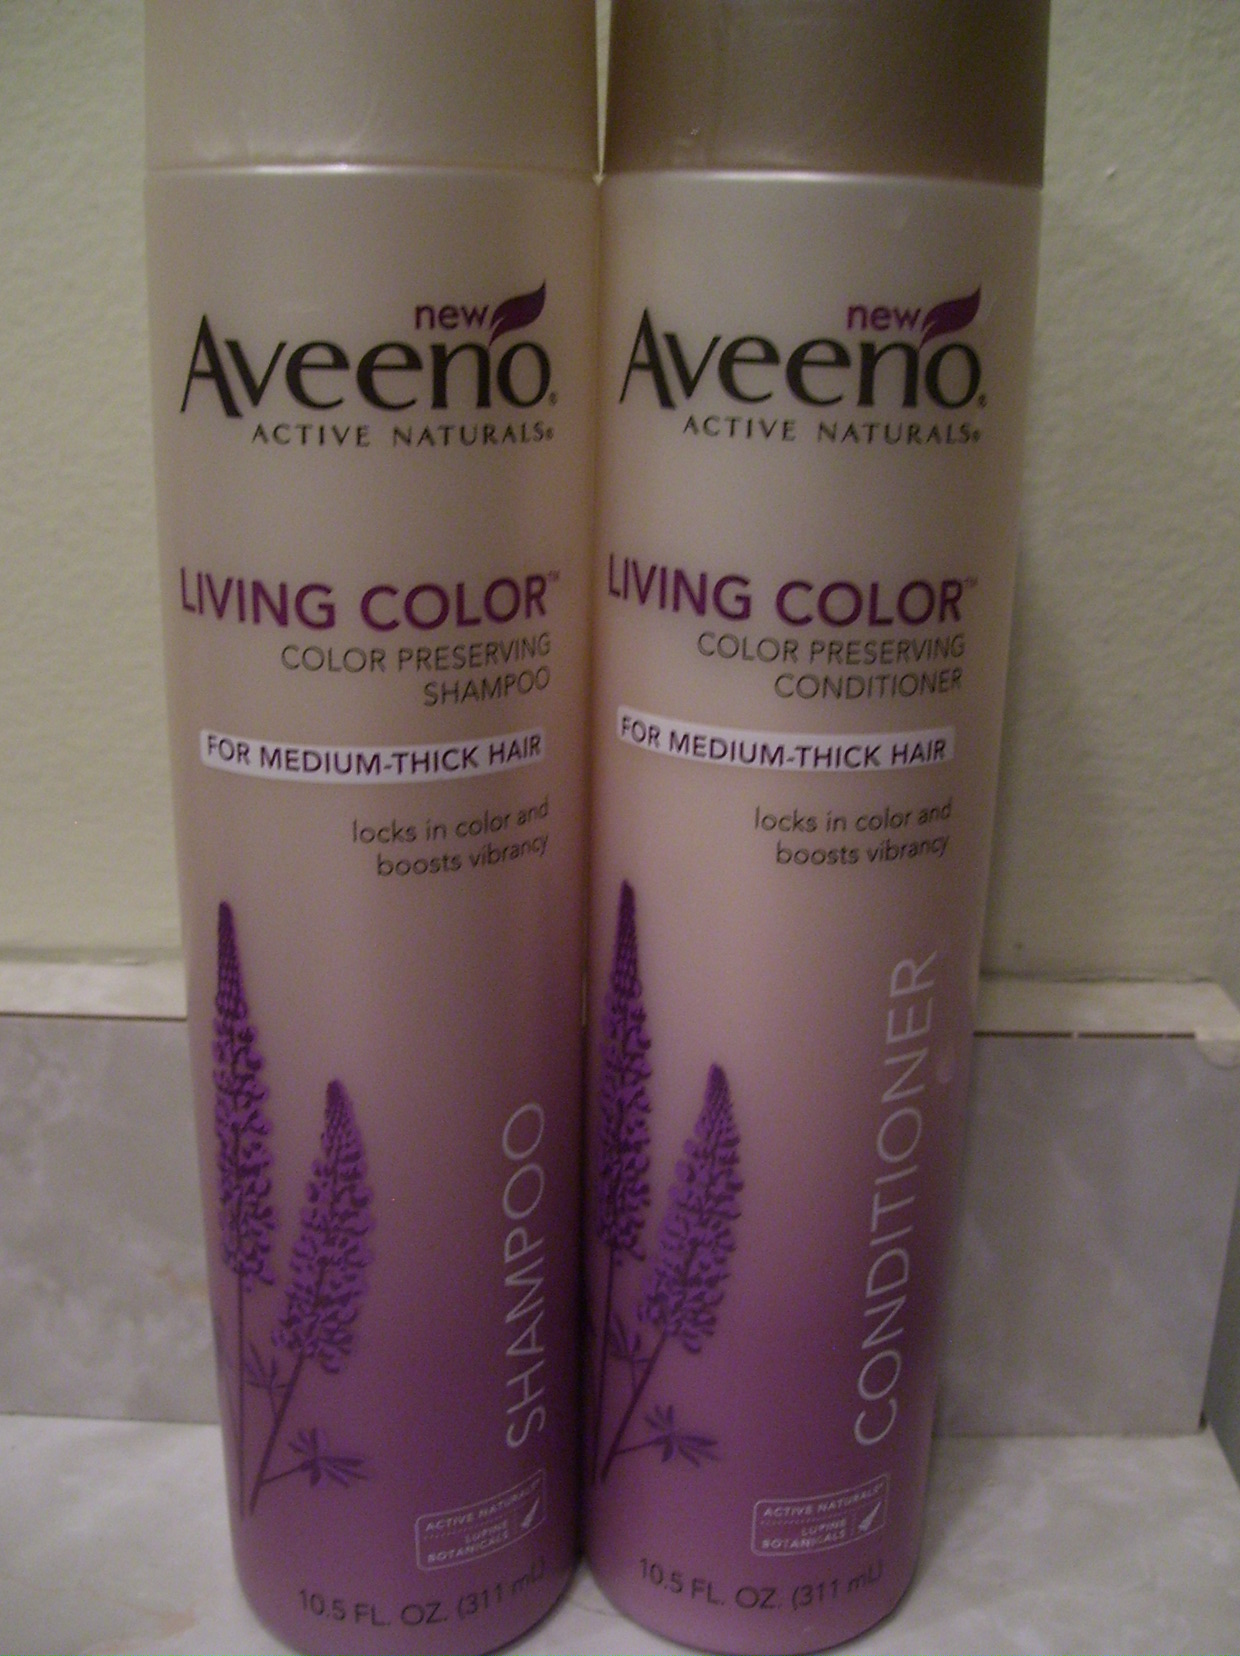 Aveeno Active Naturals Living Color – Color Preserving Shampoo & Conditioner